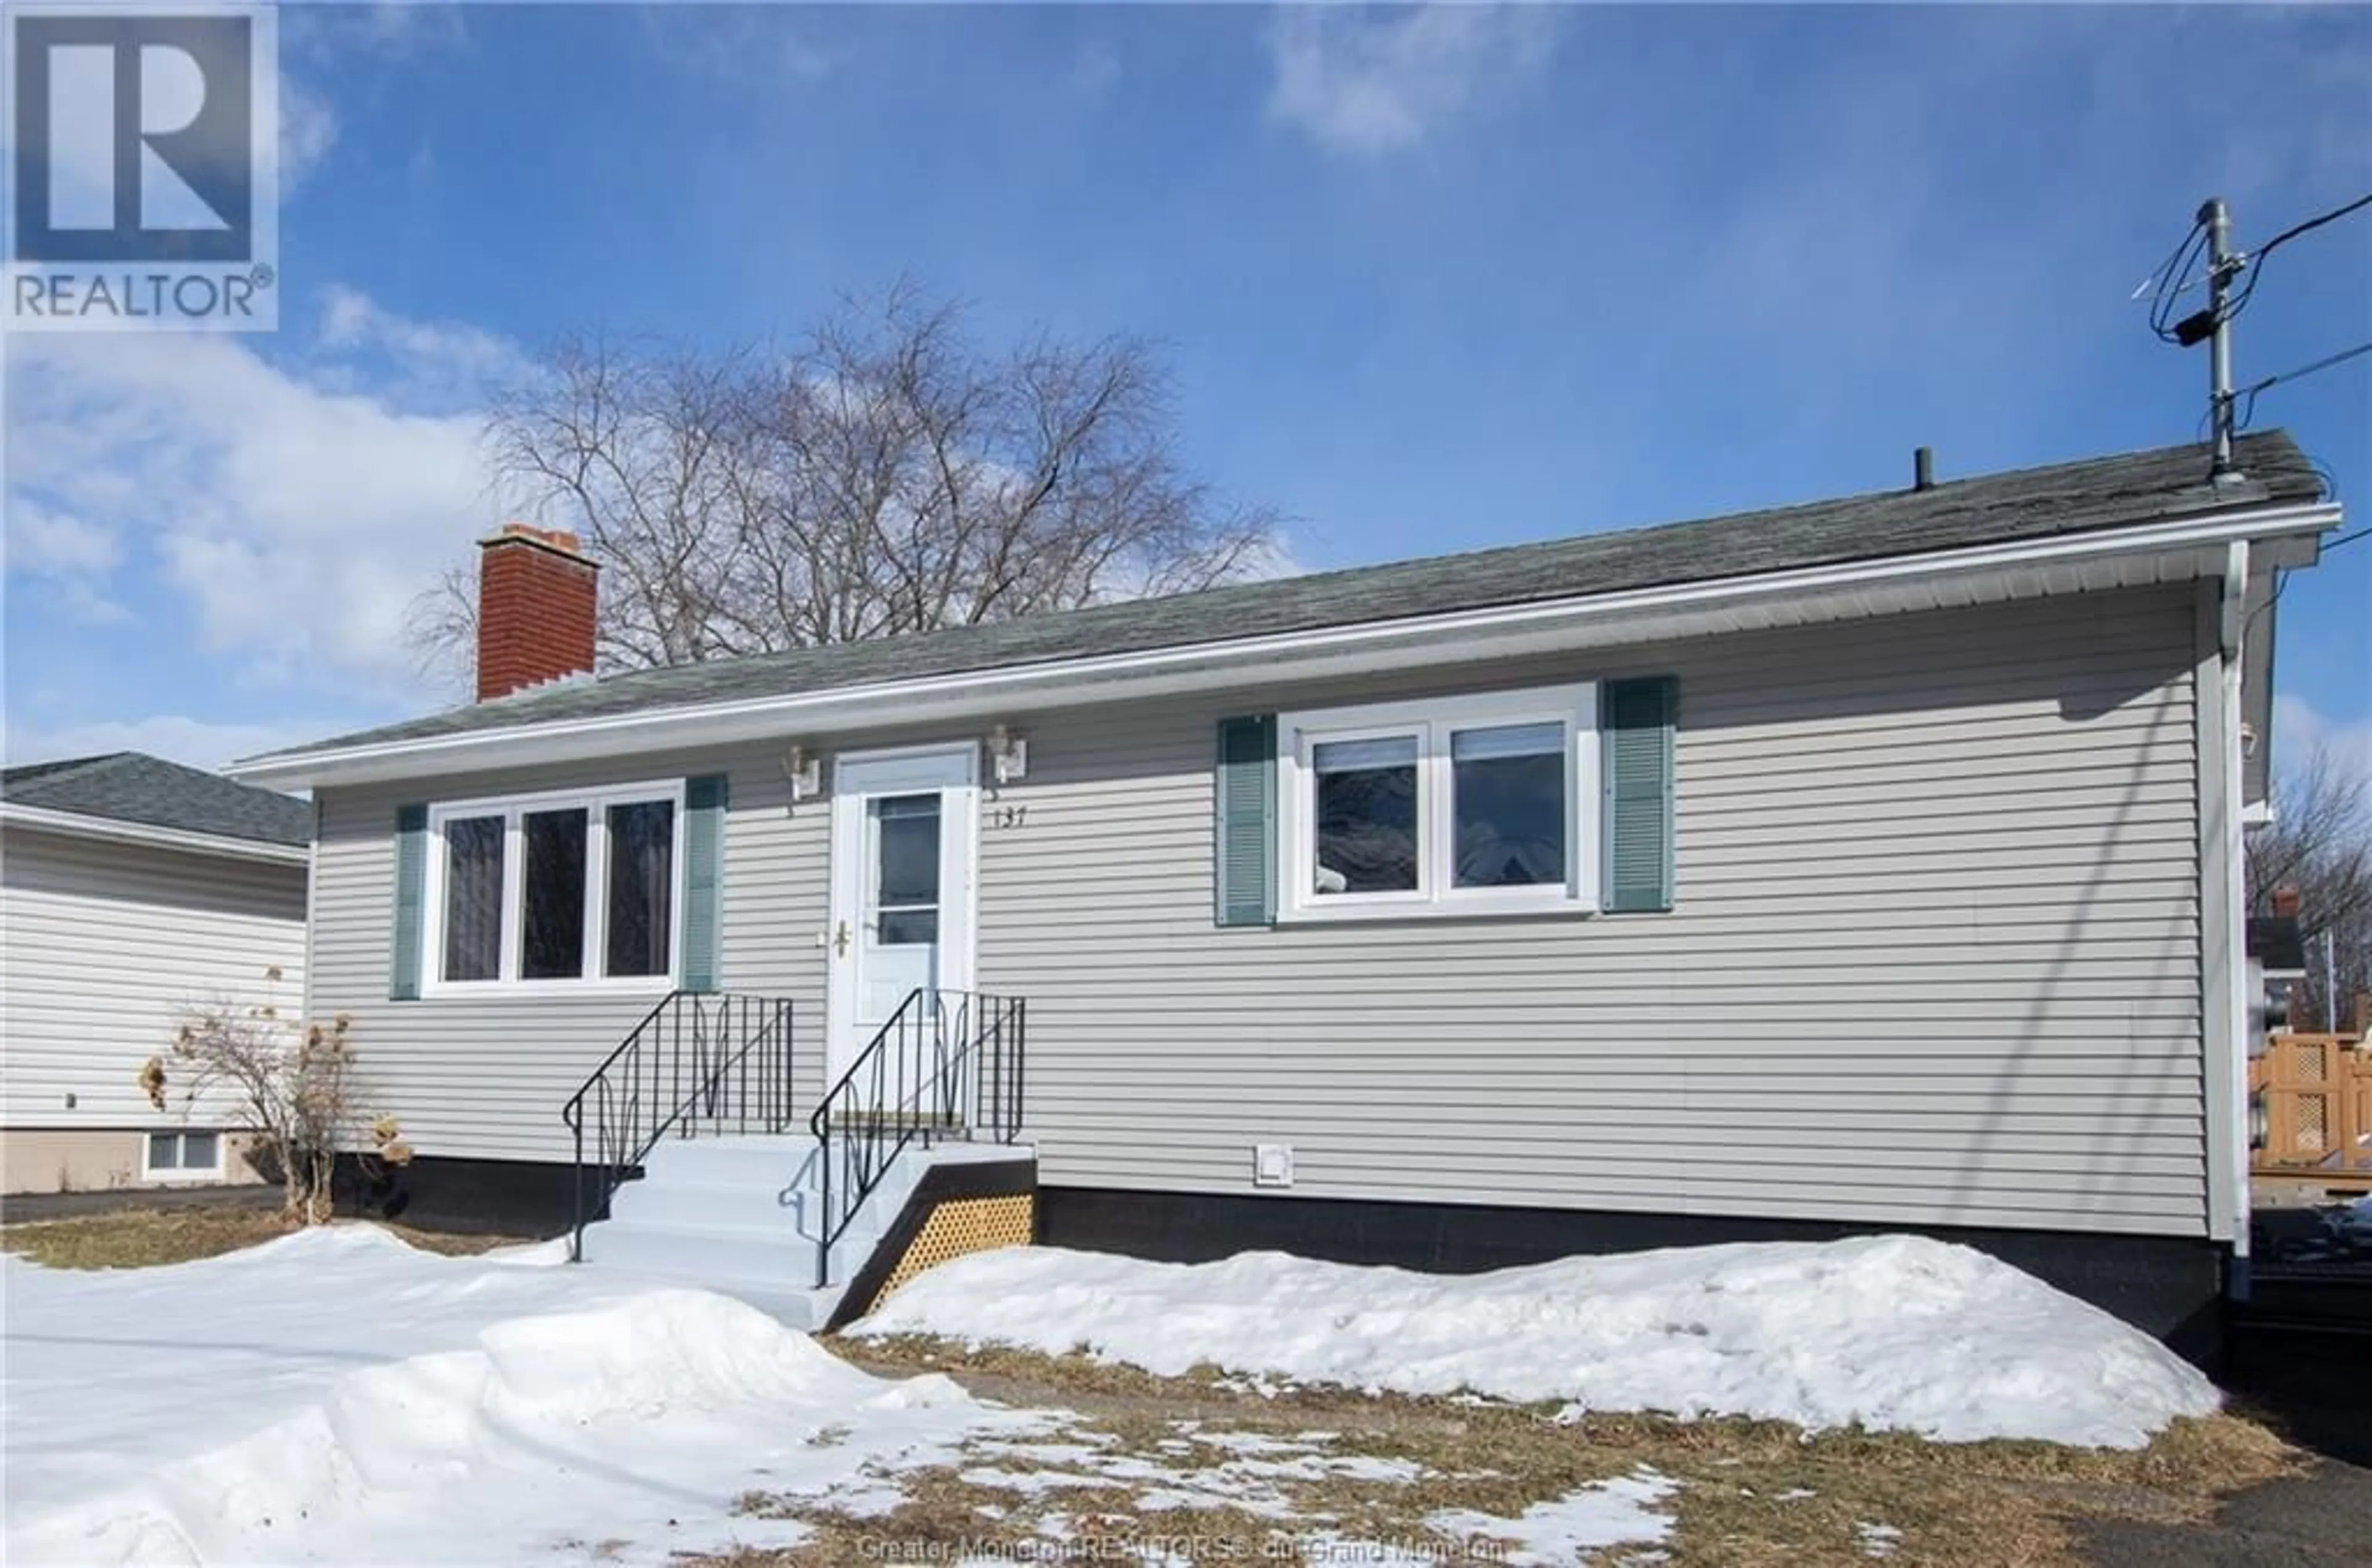 Home with vinyl exterior material for 137 McKenzie, Moncton New Brunswick E1C7Z1